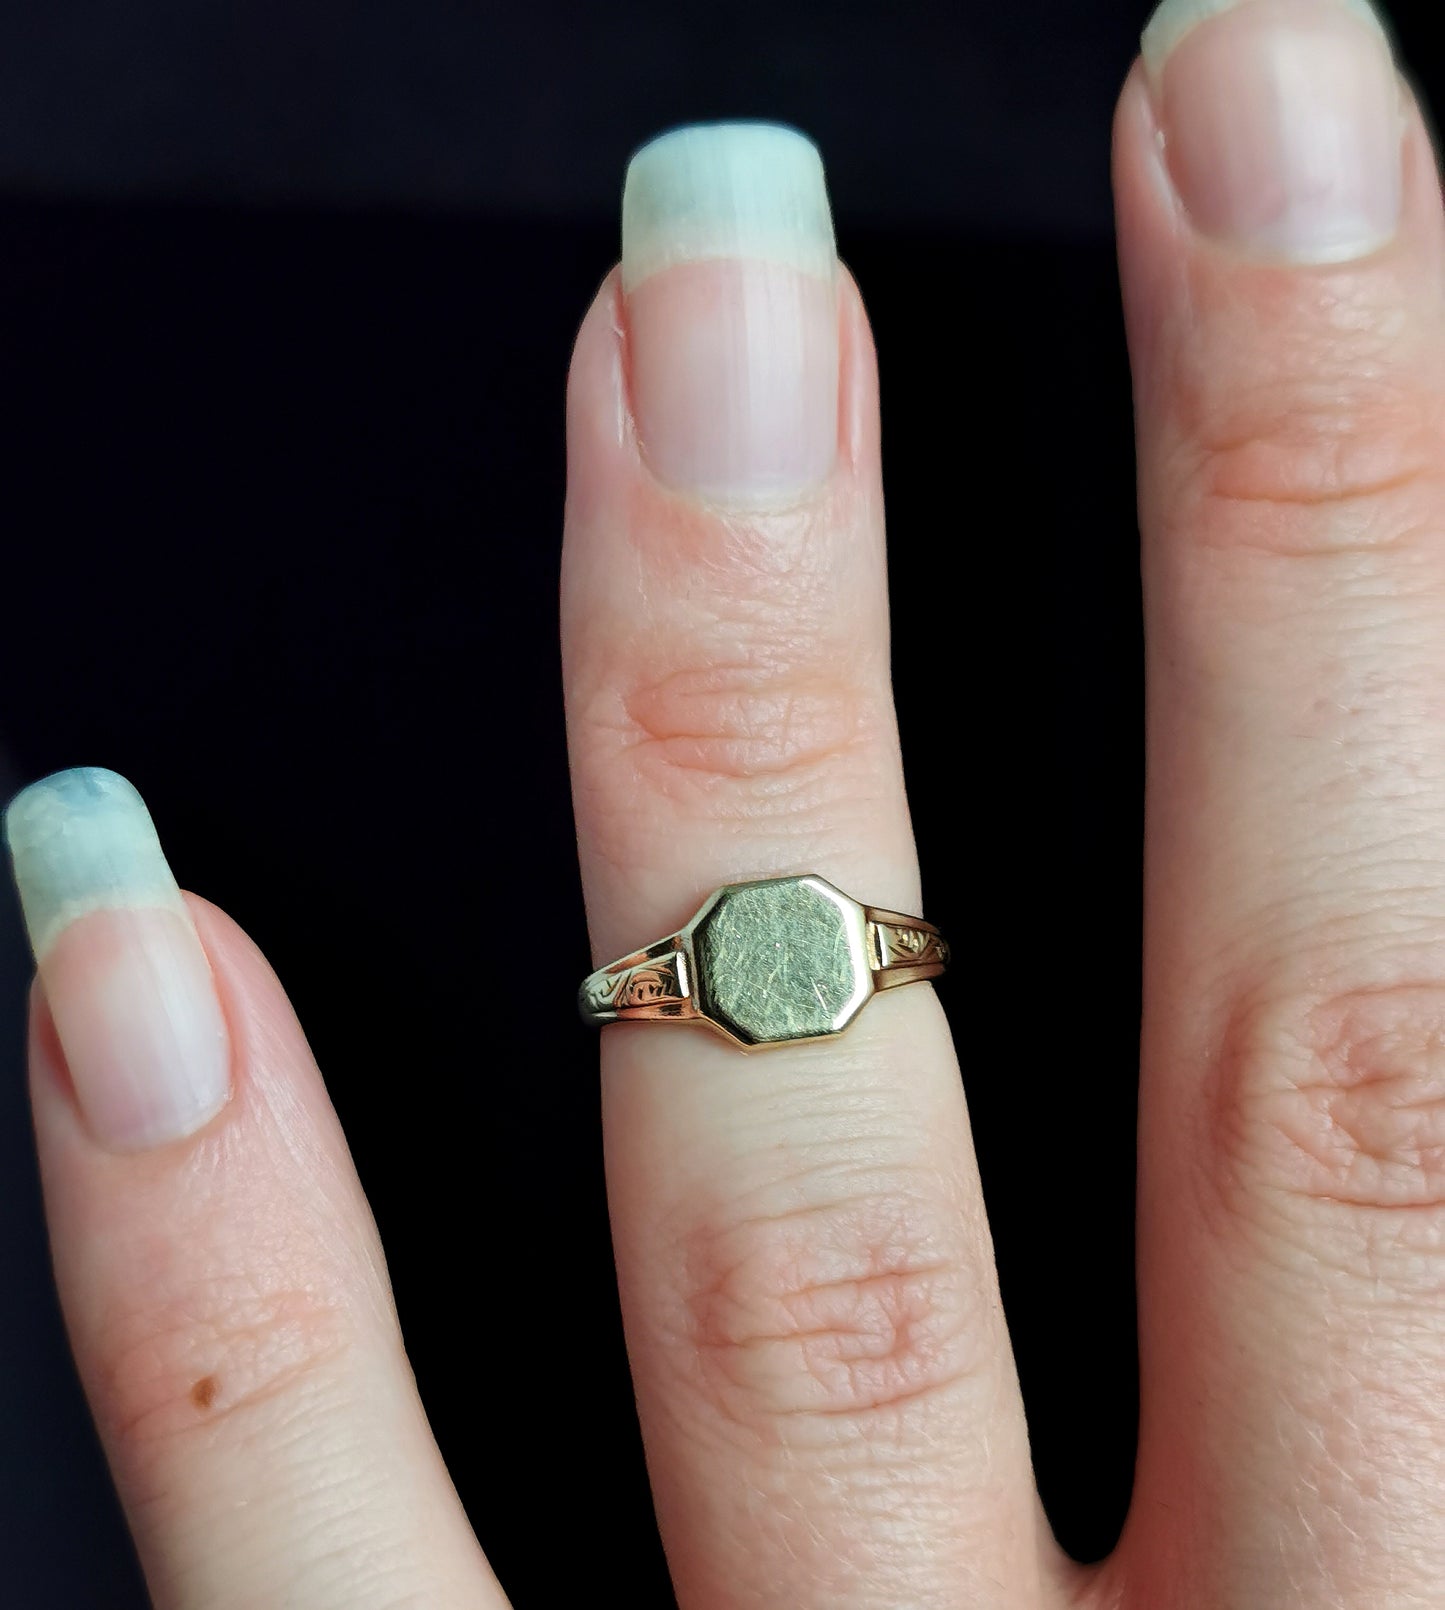 Vintage 9ct yellow gold Signet ring, Pinky ring